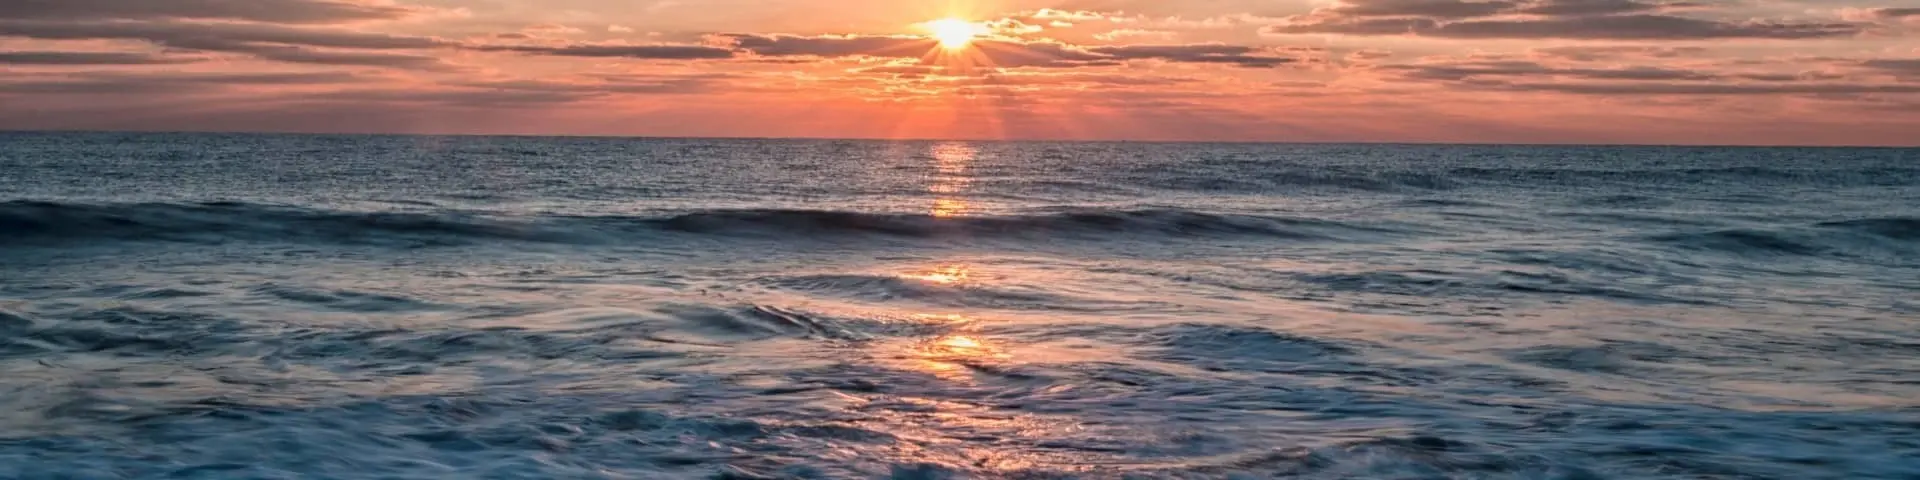 Pink and orange sunrise over ocean from Maryland shoreline